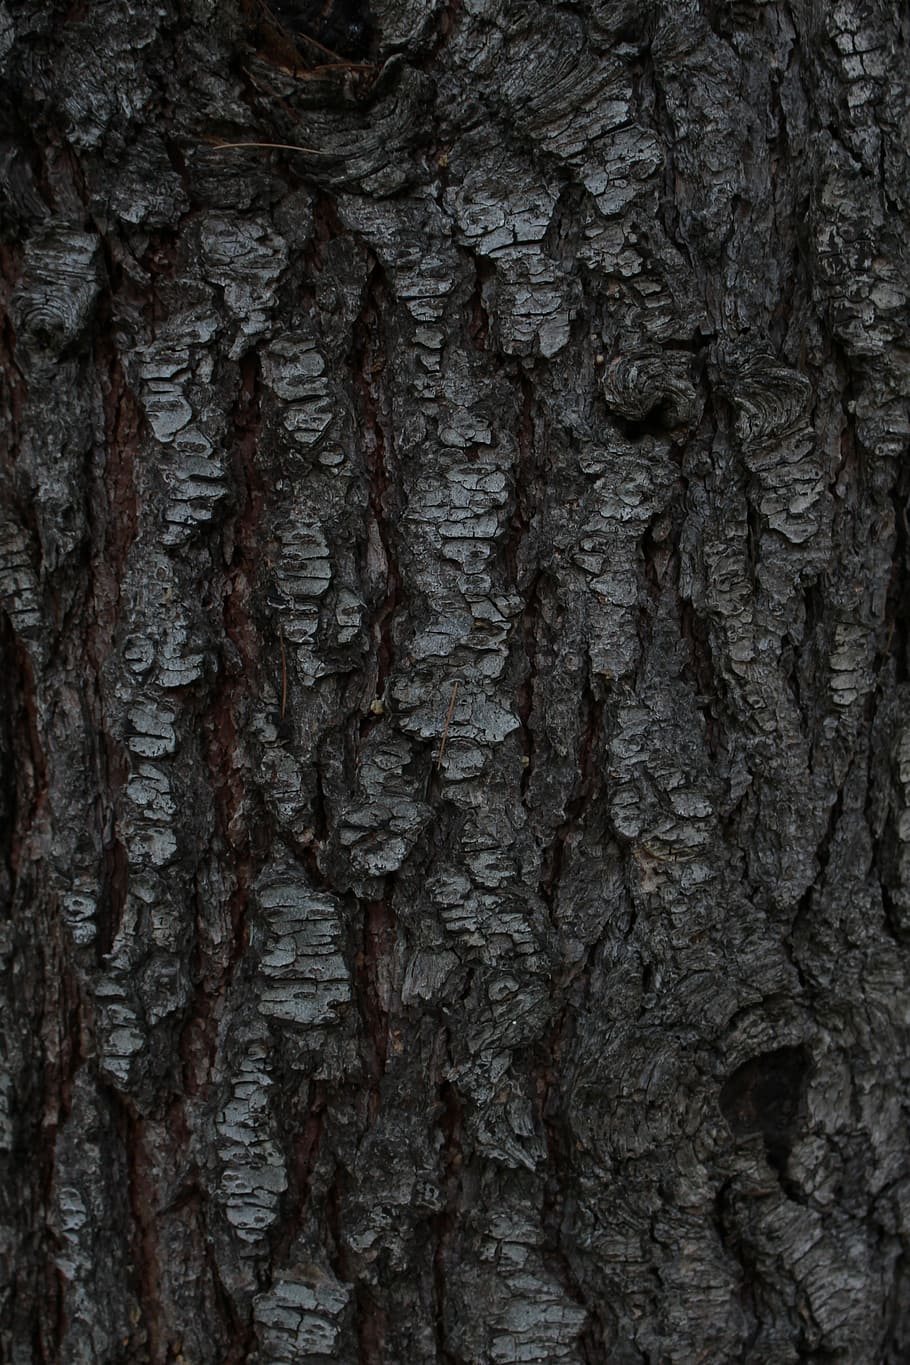 Pinus, Pohon, Latar Belakang, latar belakangnya adalah, desktop, kulit kayu, konifer, pohon jenis konifera, alam, batang